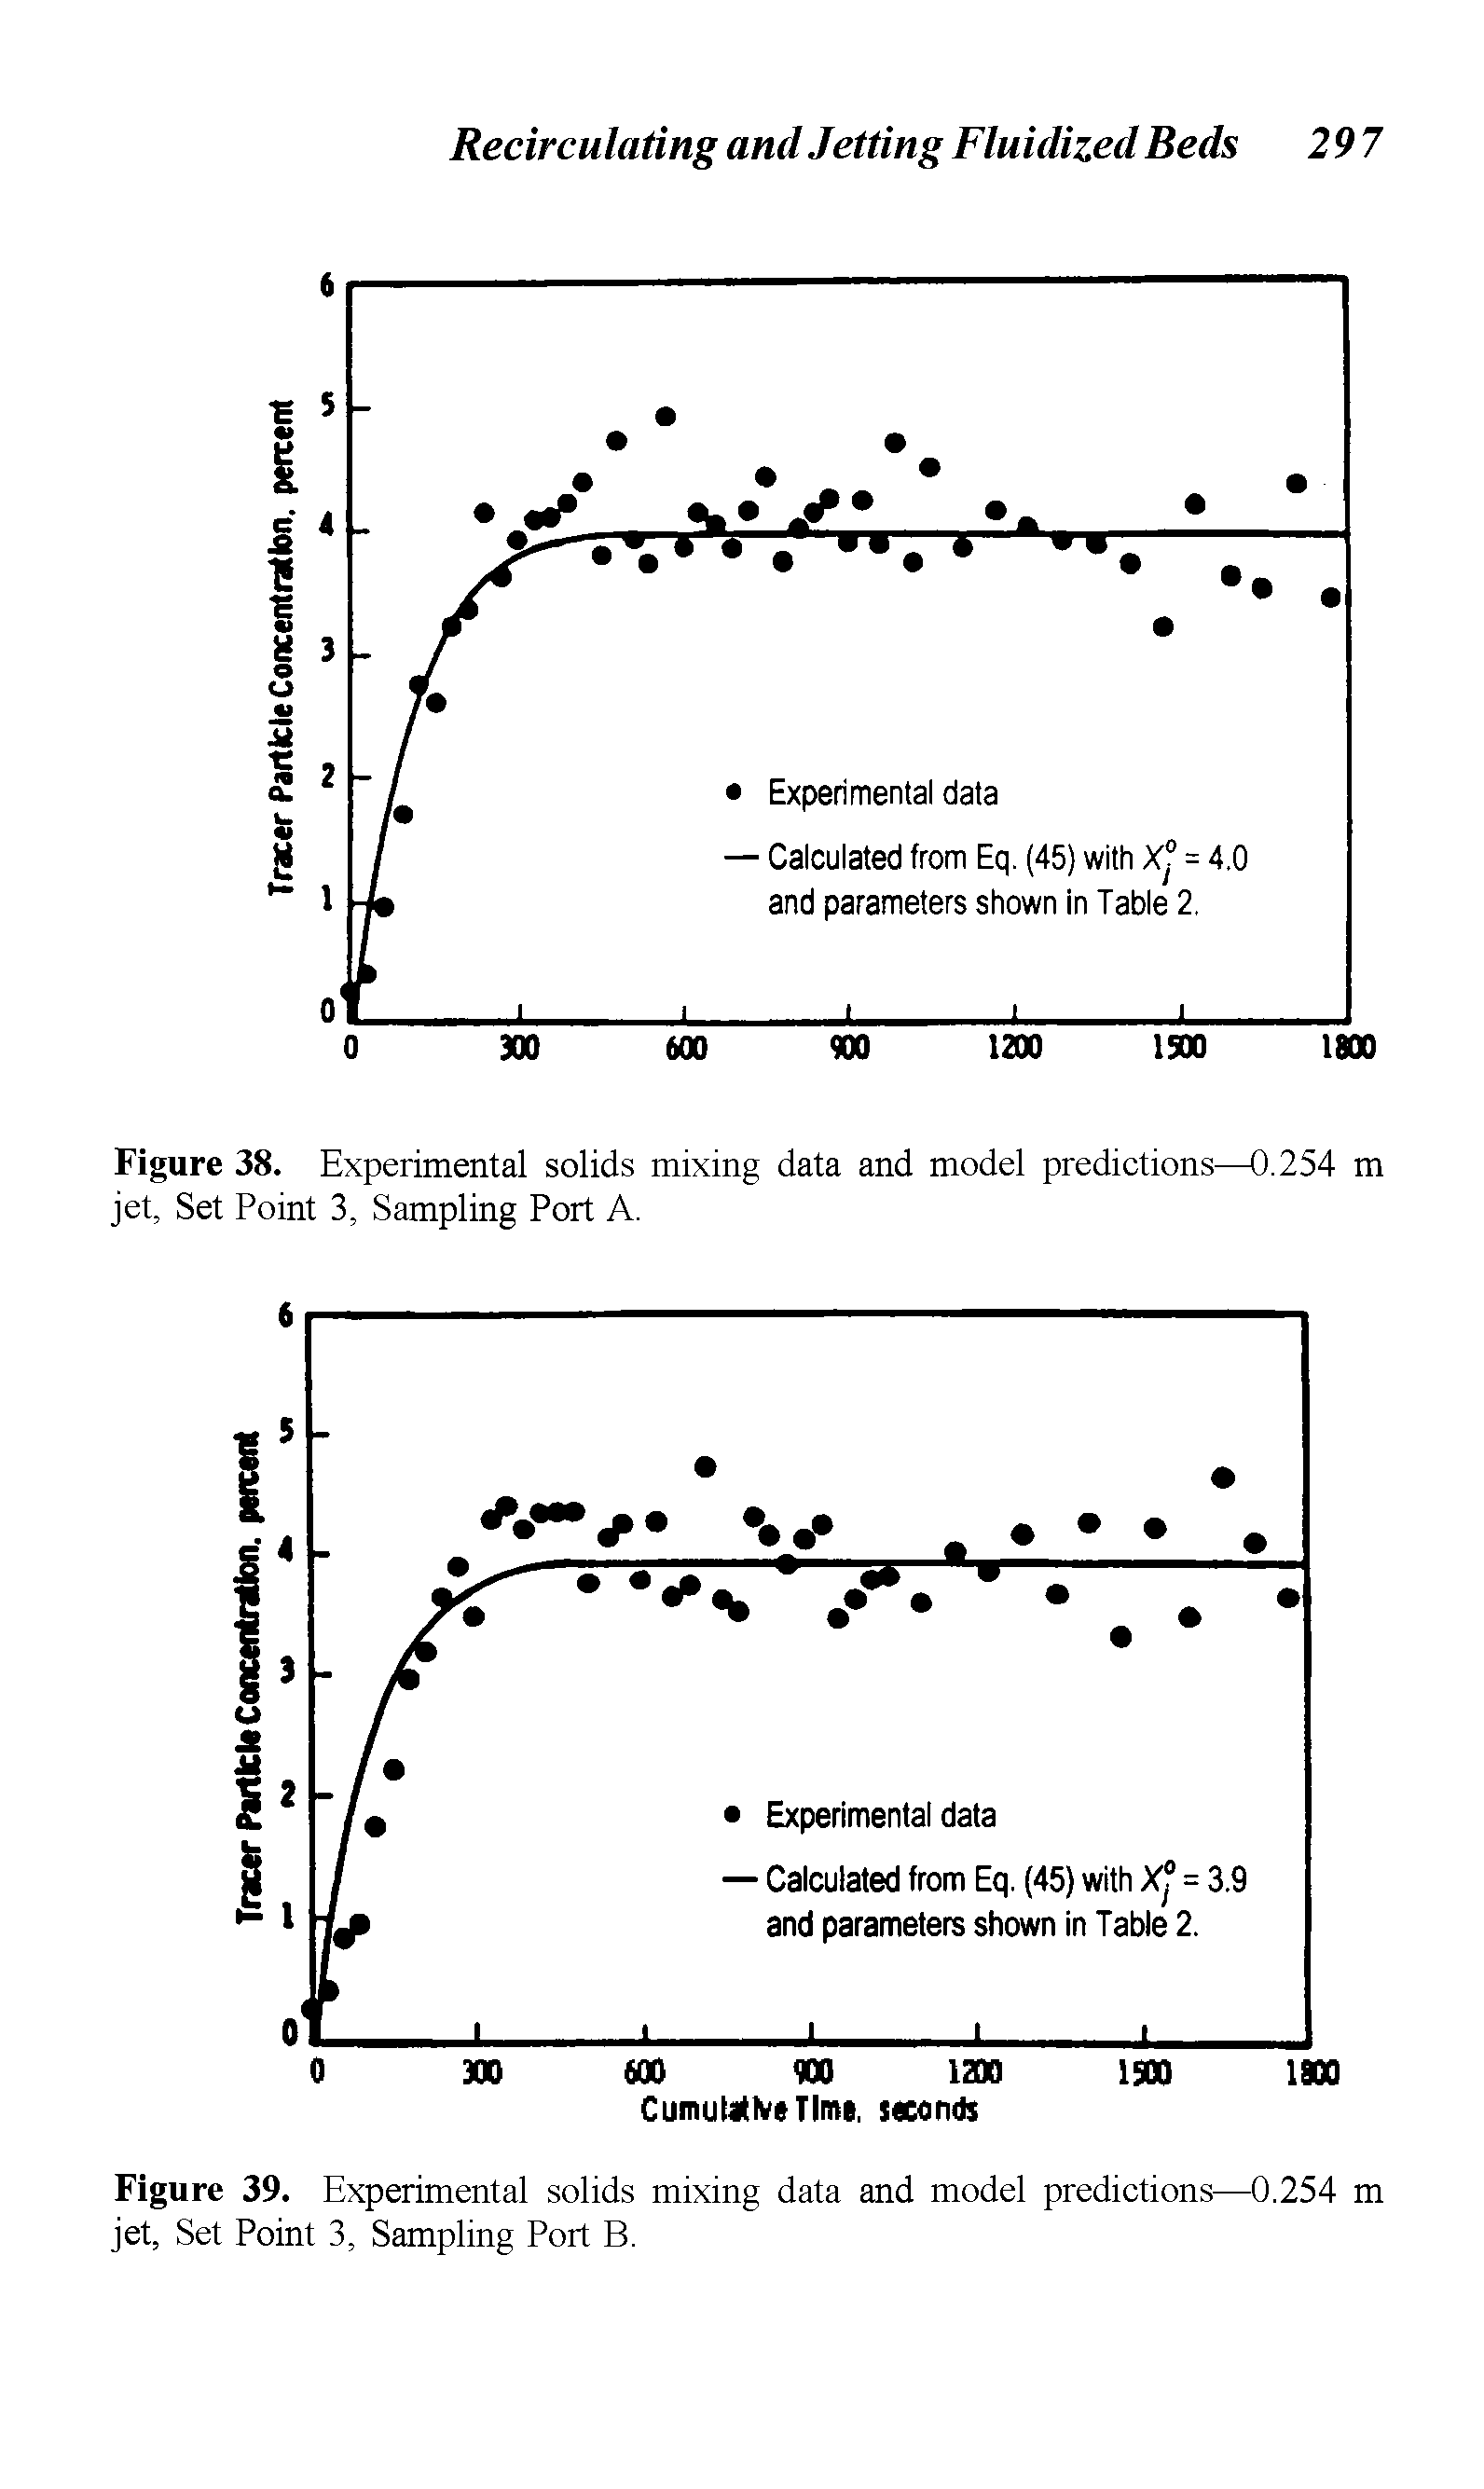 Figure 38. Experimental solids mixing data and model predictions—0.254 m jet, Set Point 3, Sampling Port A.